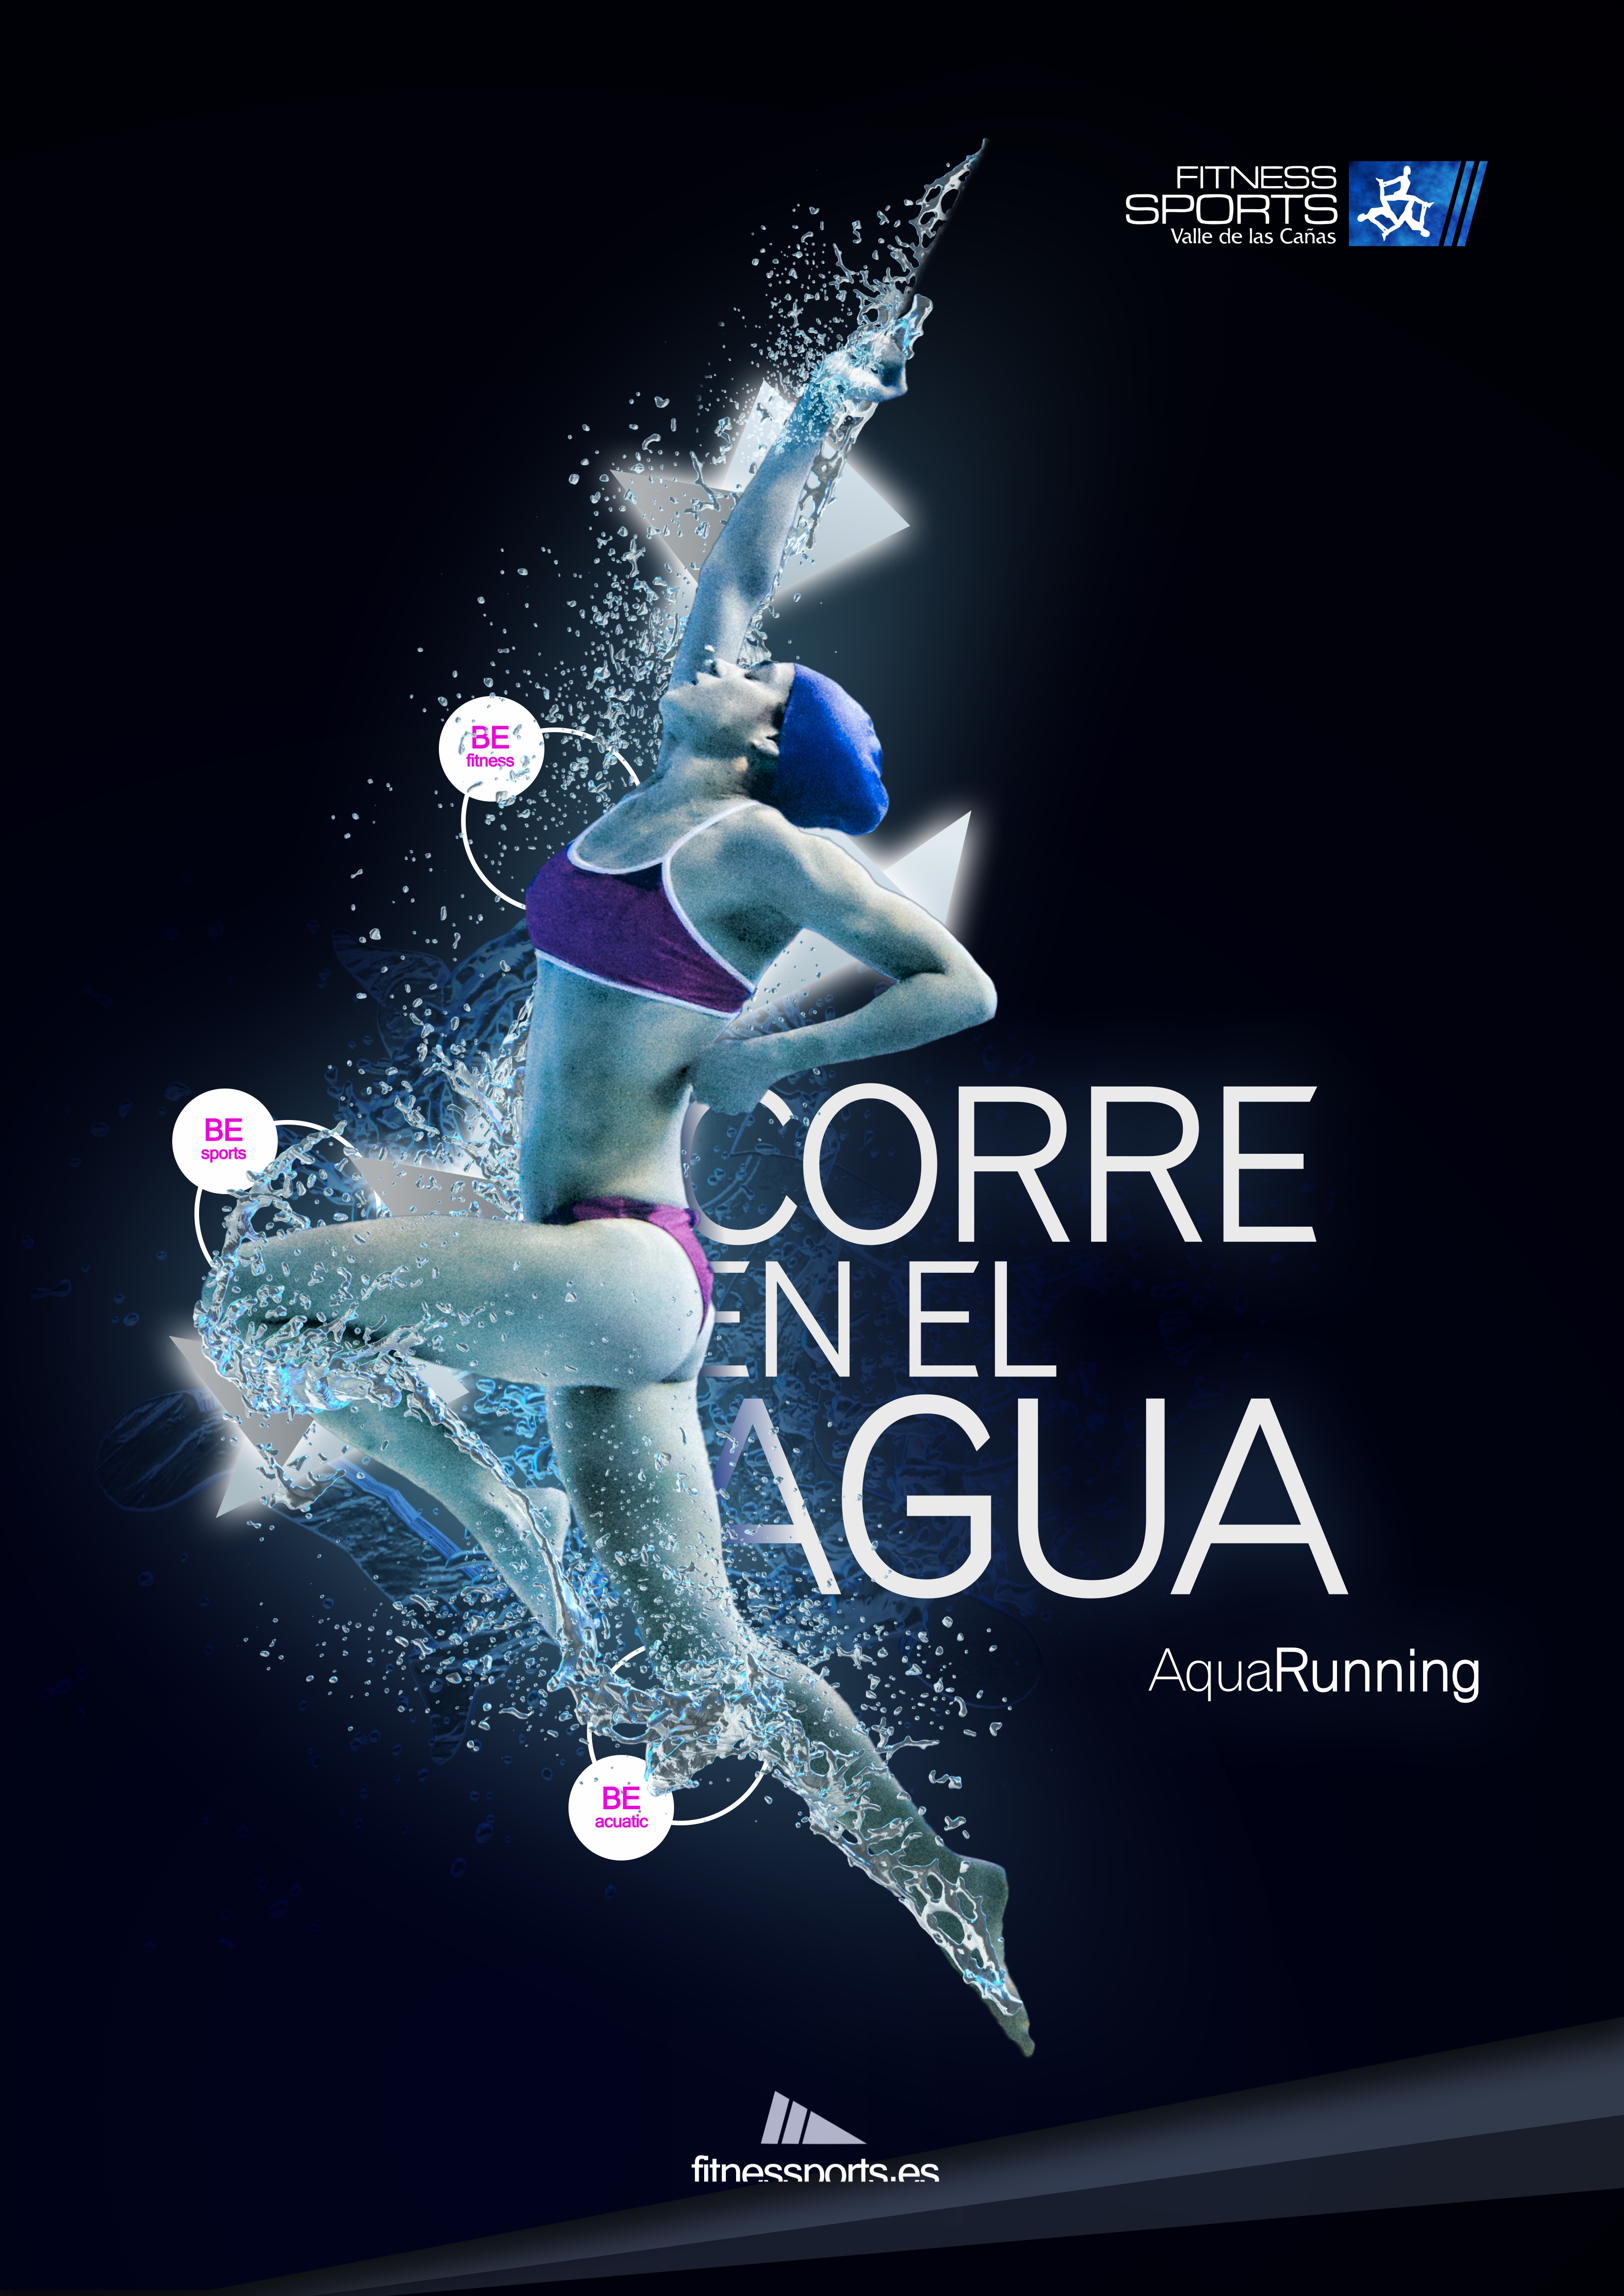 https://www.perfectpixel.es/wp-content/uploads/2014/03/Aqua-Running-Fitness-v2-poster-Fitness-Sports-fitnessports-by-PerfectPixel-Publicidad.jpg